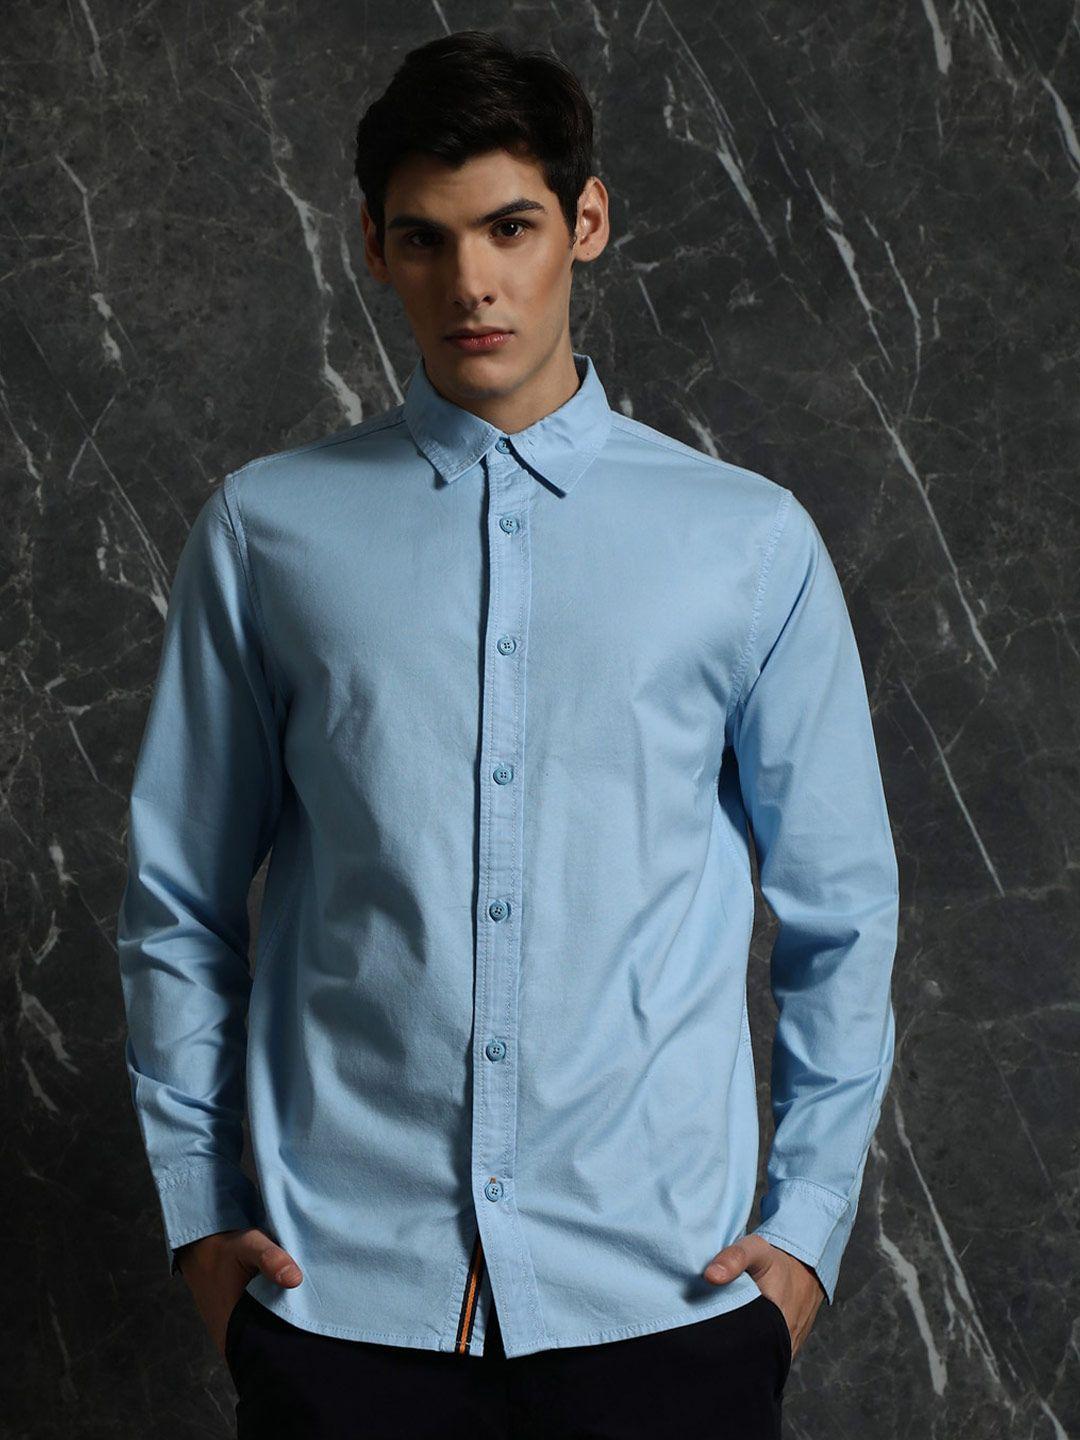 breakbounce blue spread long regular sleeves collar oxford cotton casual shirt